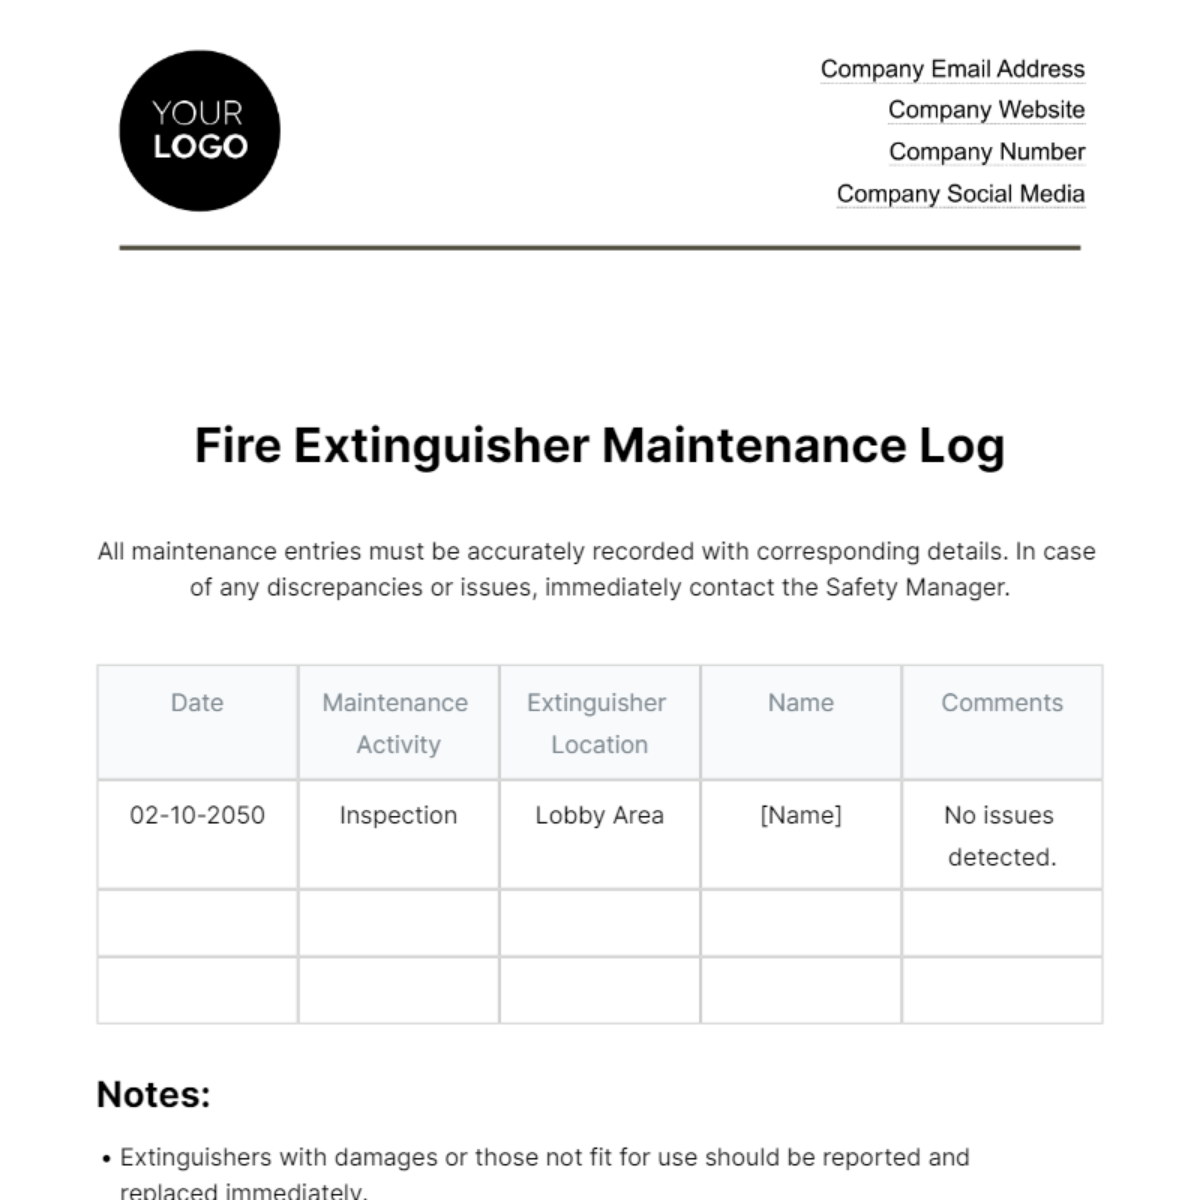 Fire Extinguisher Maintenance Log HR Template